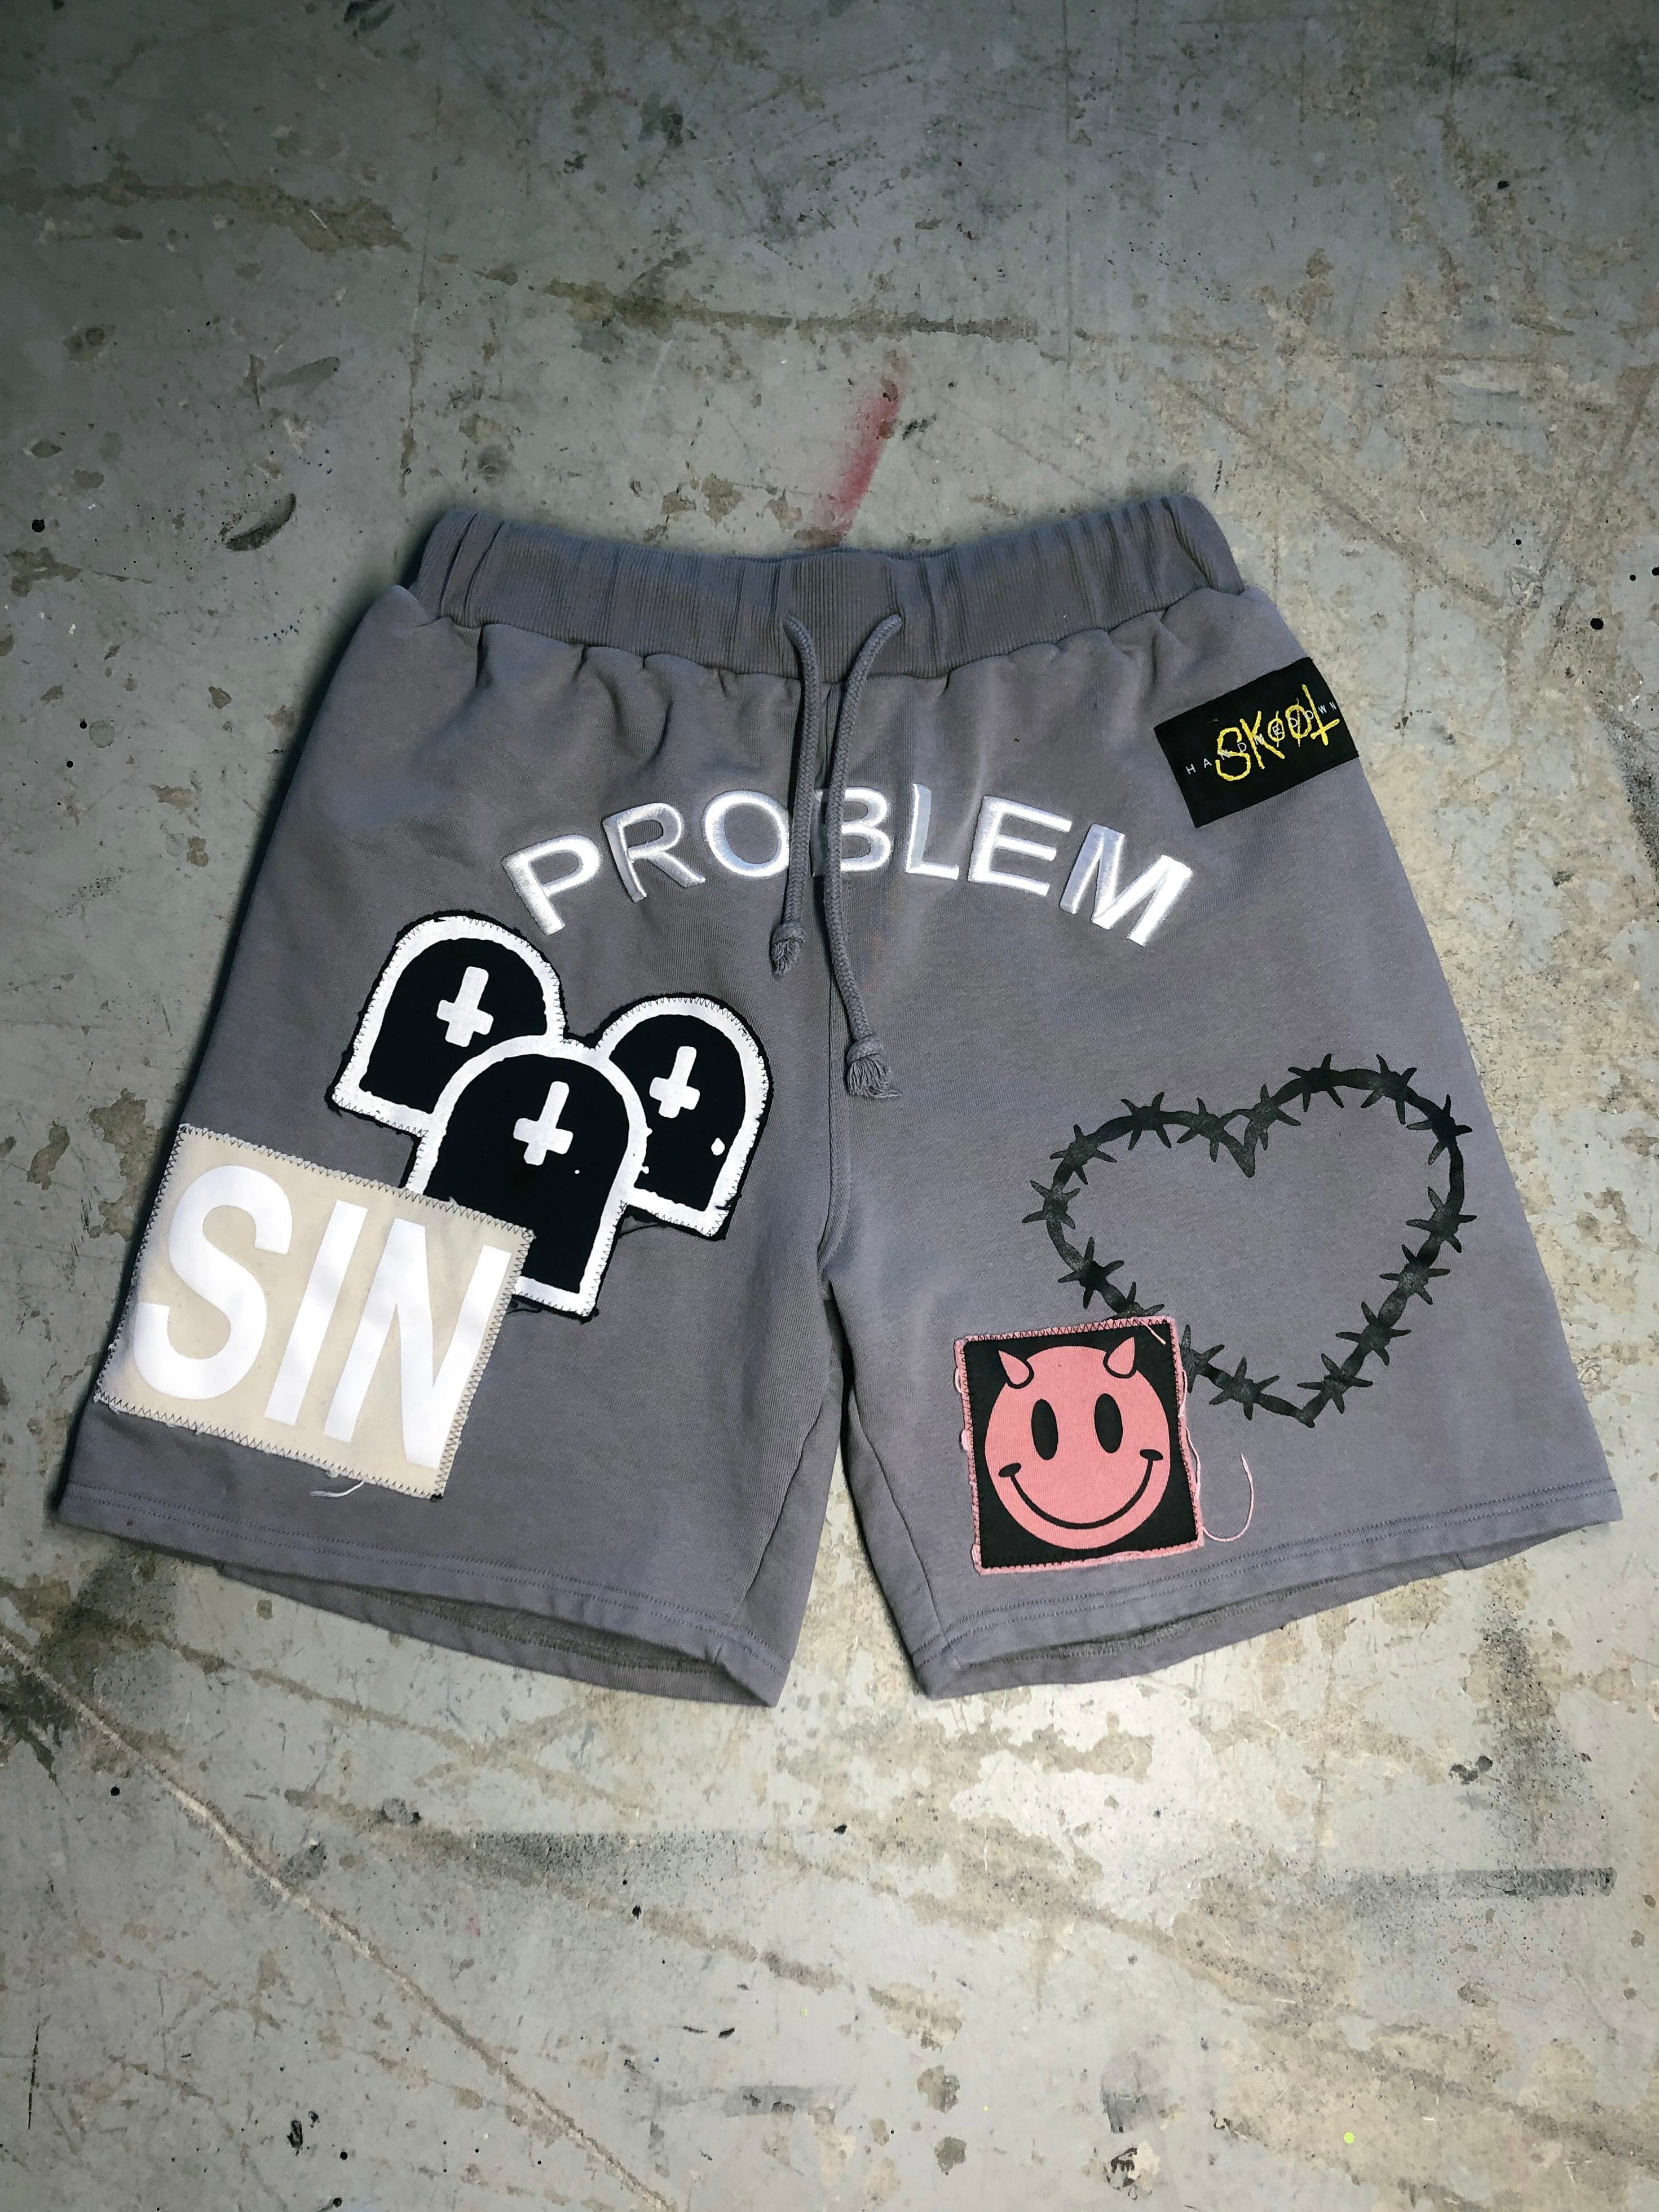 Problem6oy Shorts